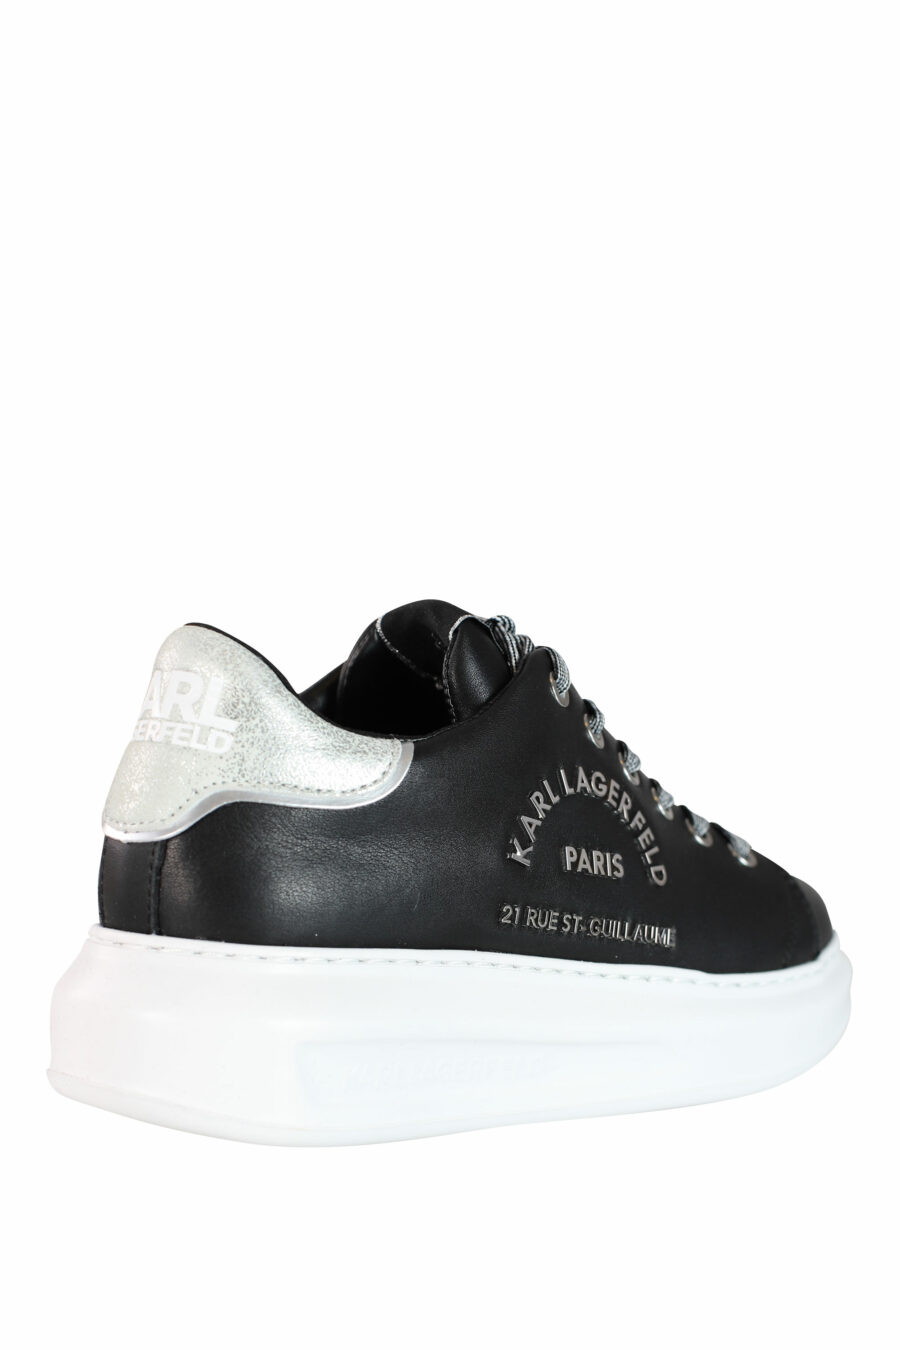 Zapatillas negras con detalles plateado y logo lettering "rue st guillaume" - IMG 3568